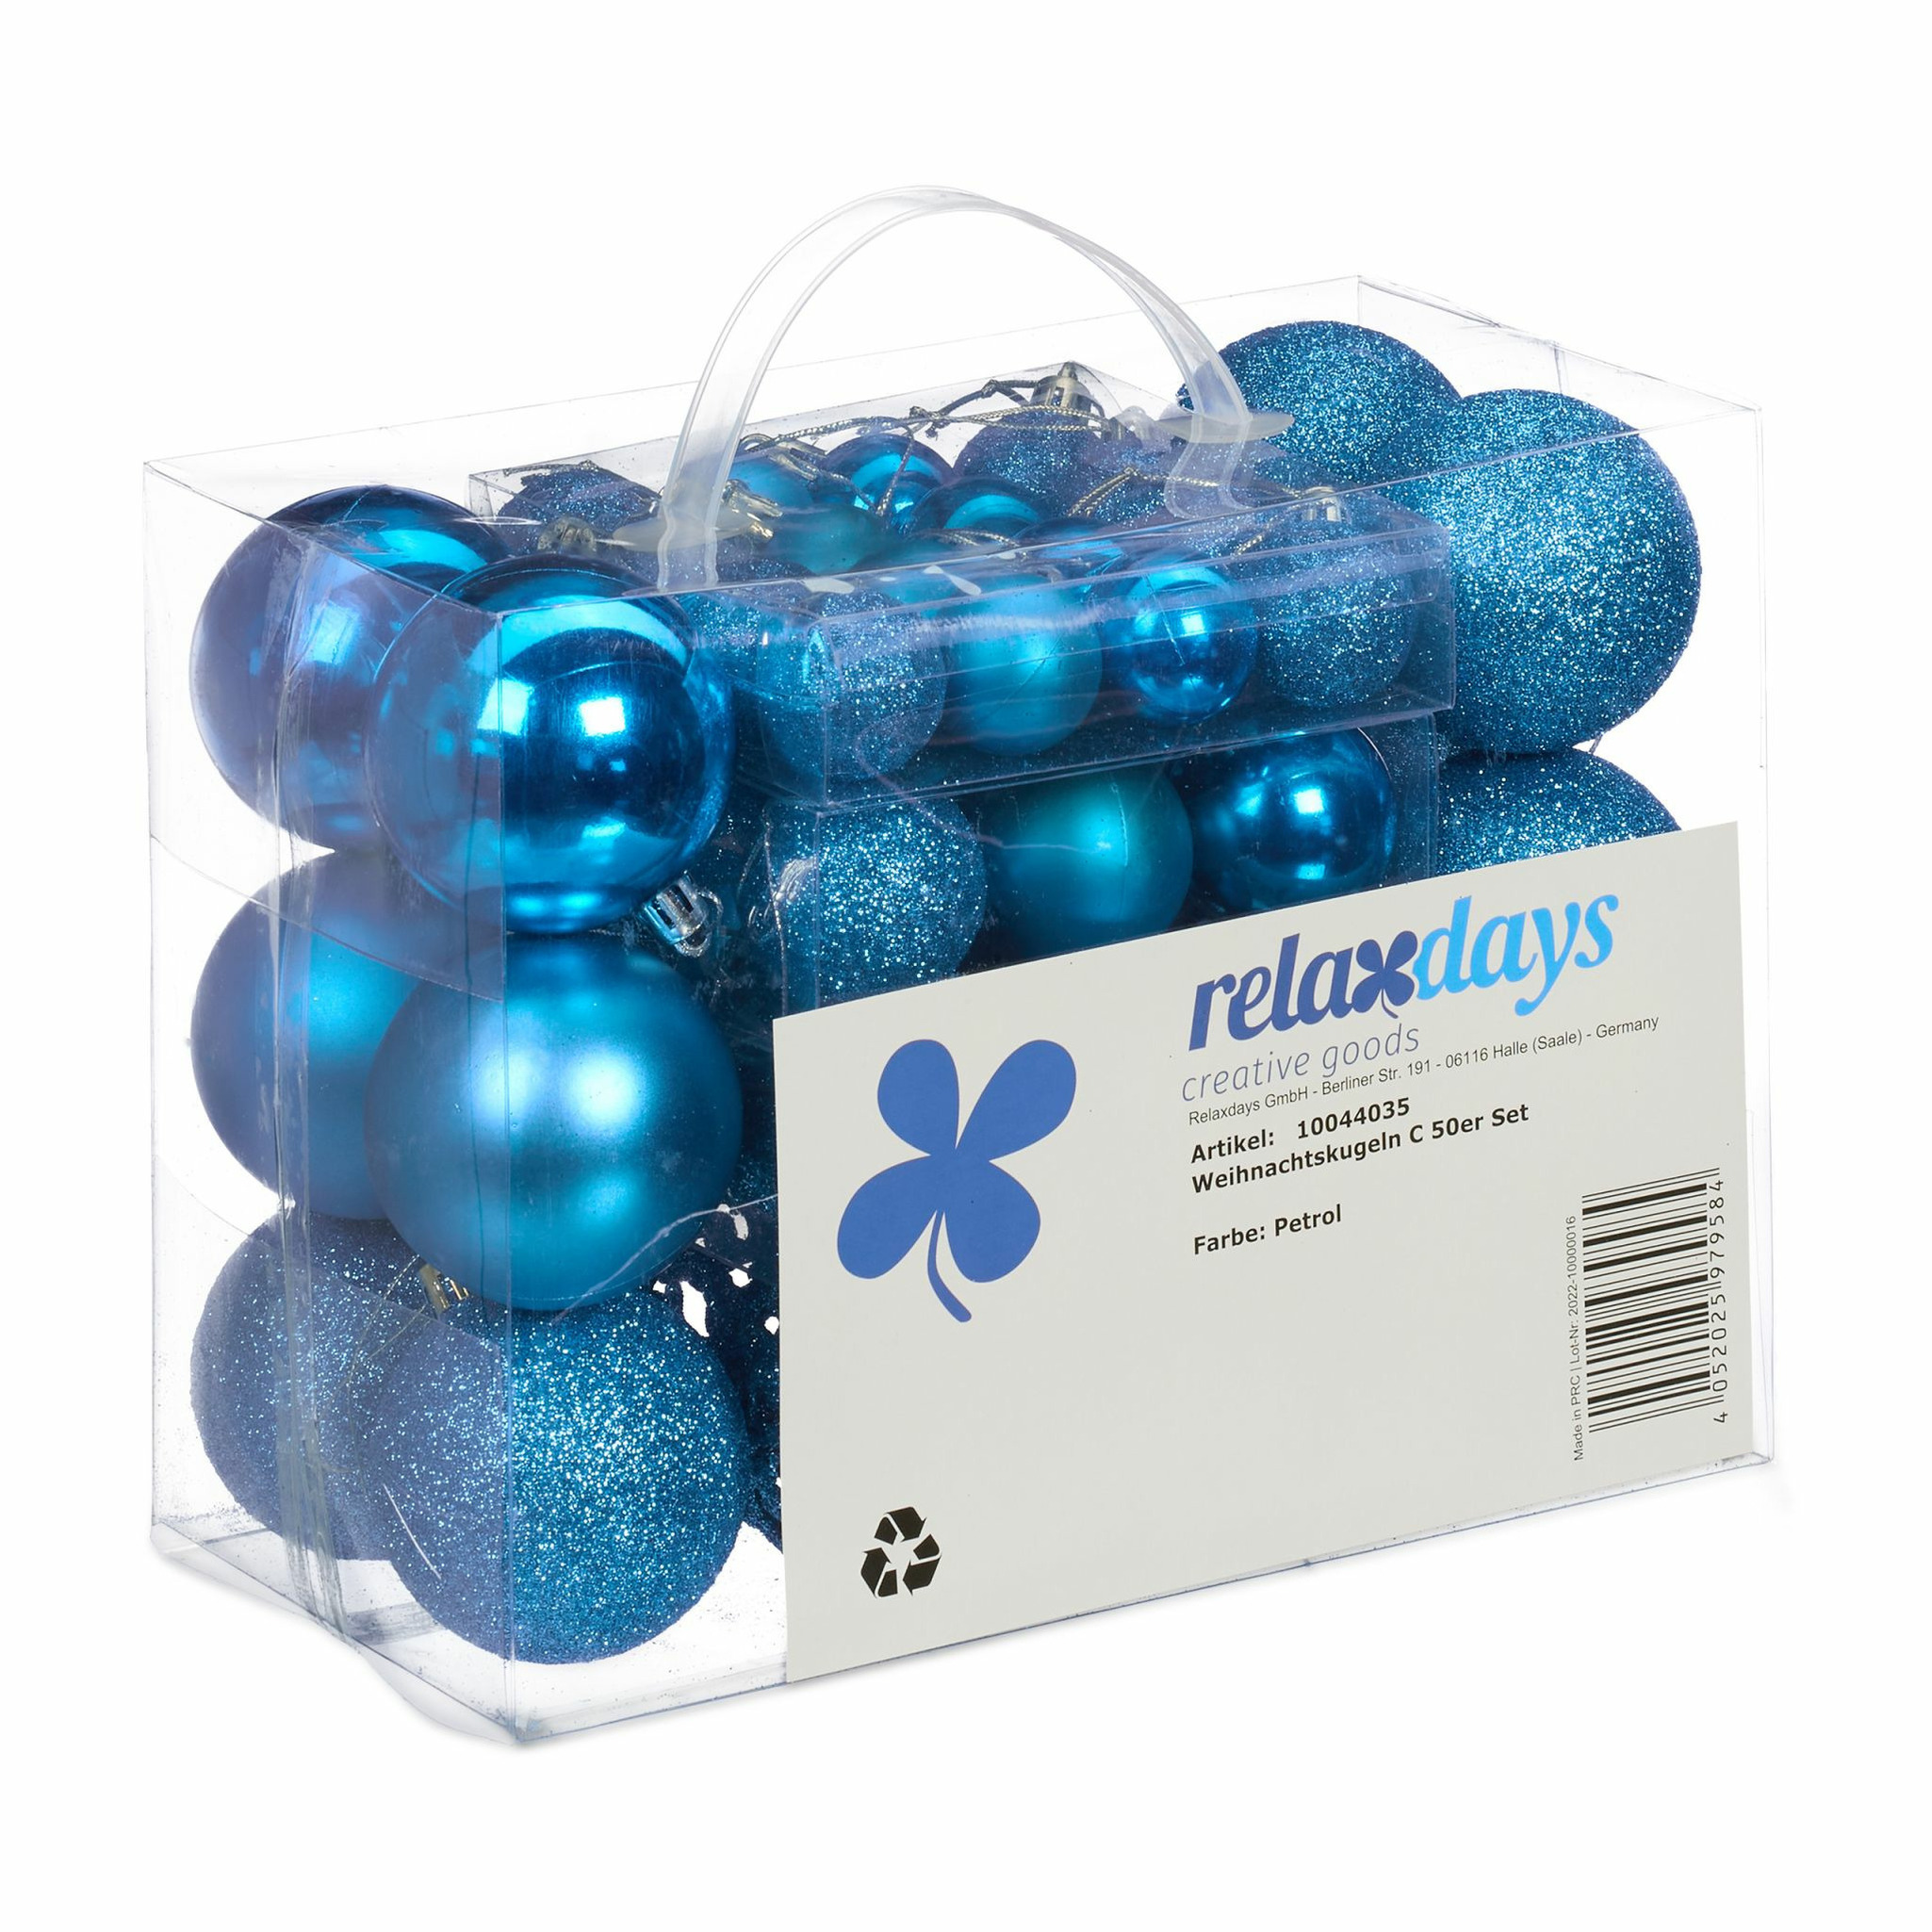 Relaxdays kerstballen 50x st kobalt blauw 3, 4 en 6 cm kunststof mat-glans-glitter